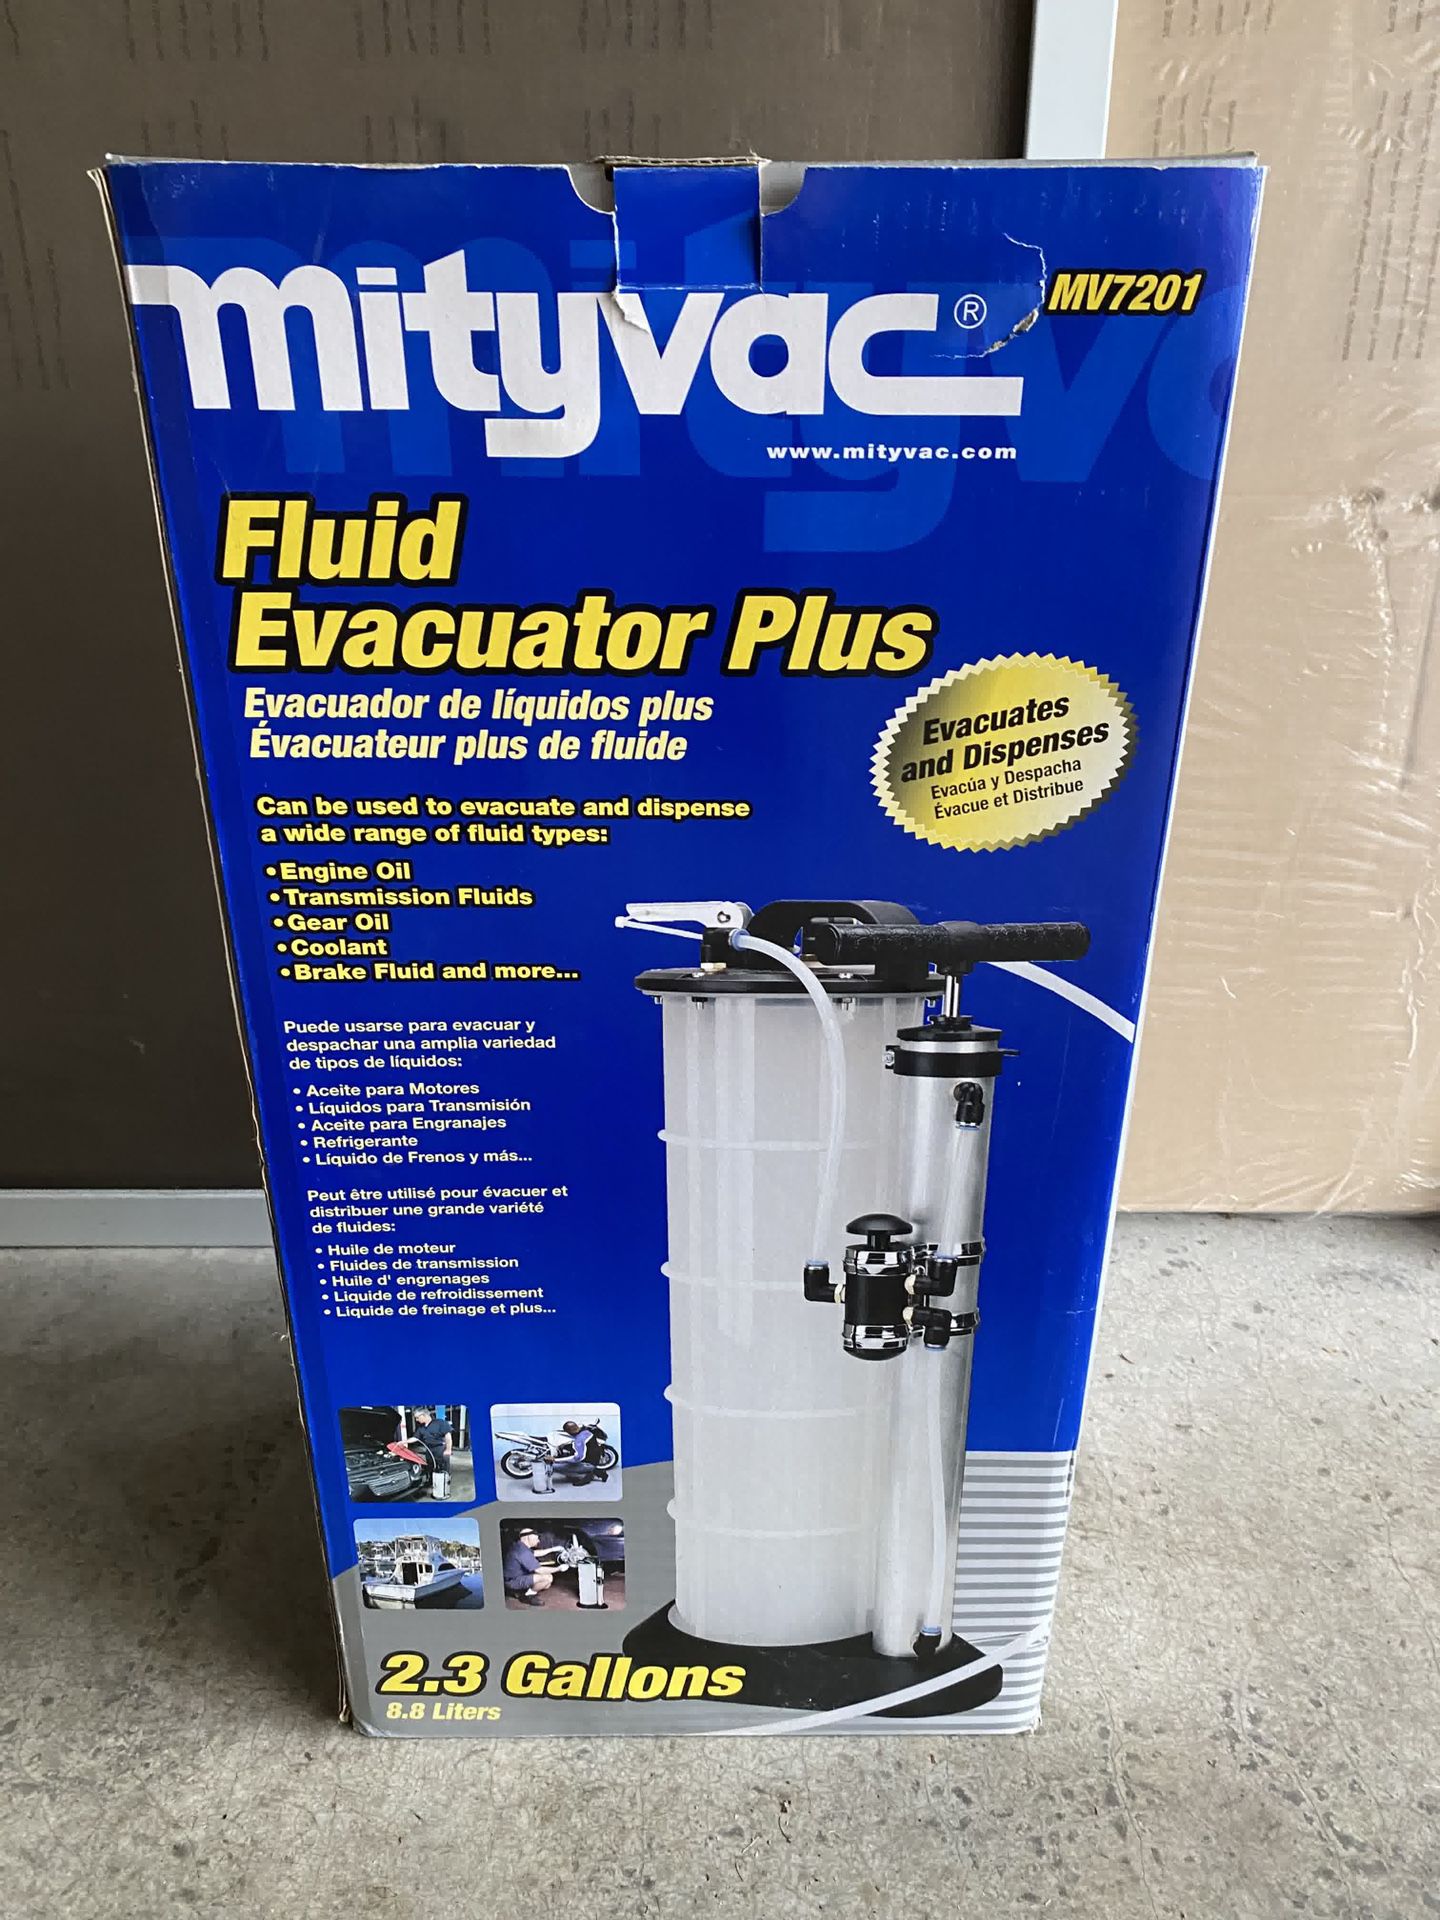 Mityvac 7201 Manual Fluid Evacuator Plus